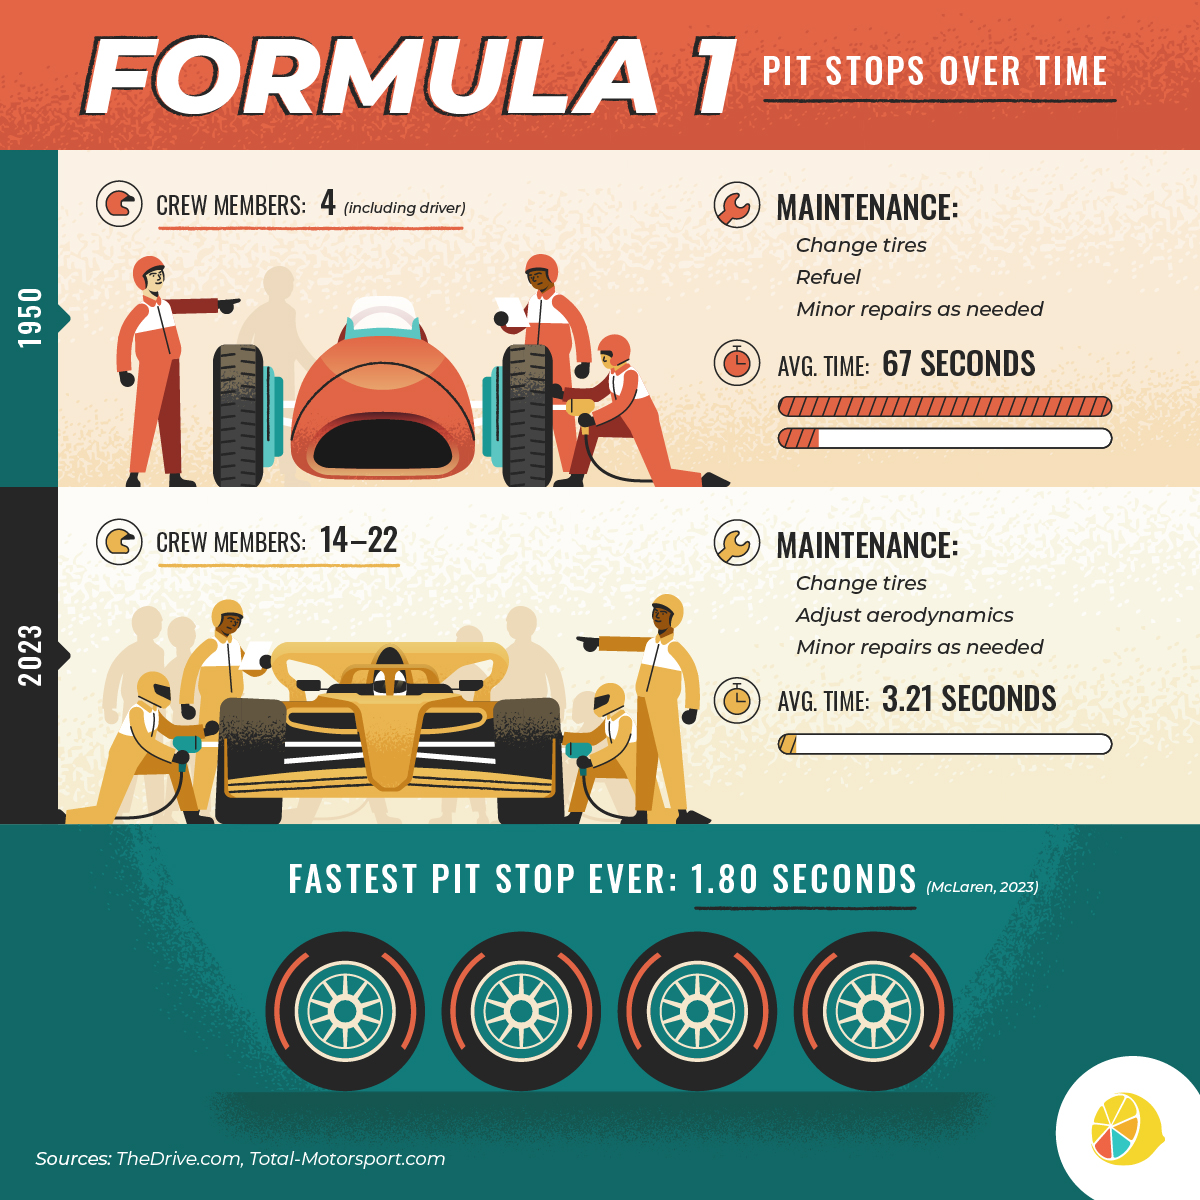 Formula 1 Pit Stops Over Time